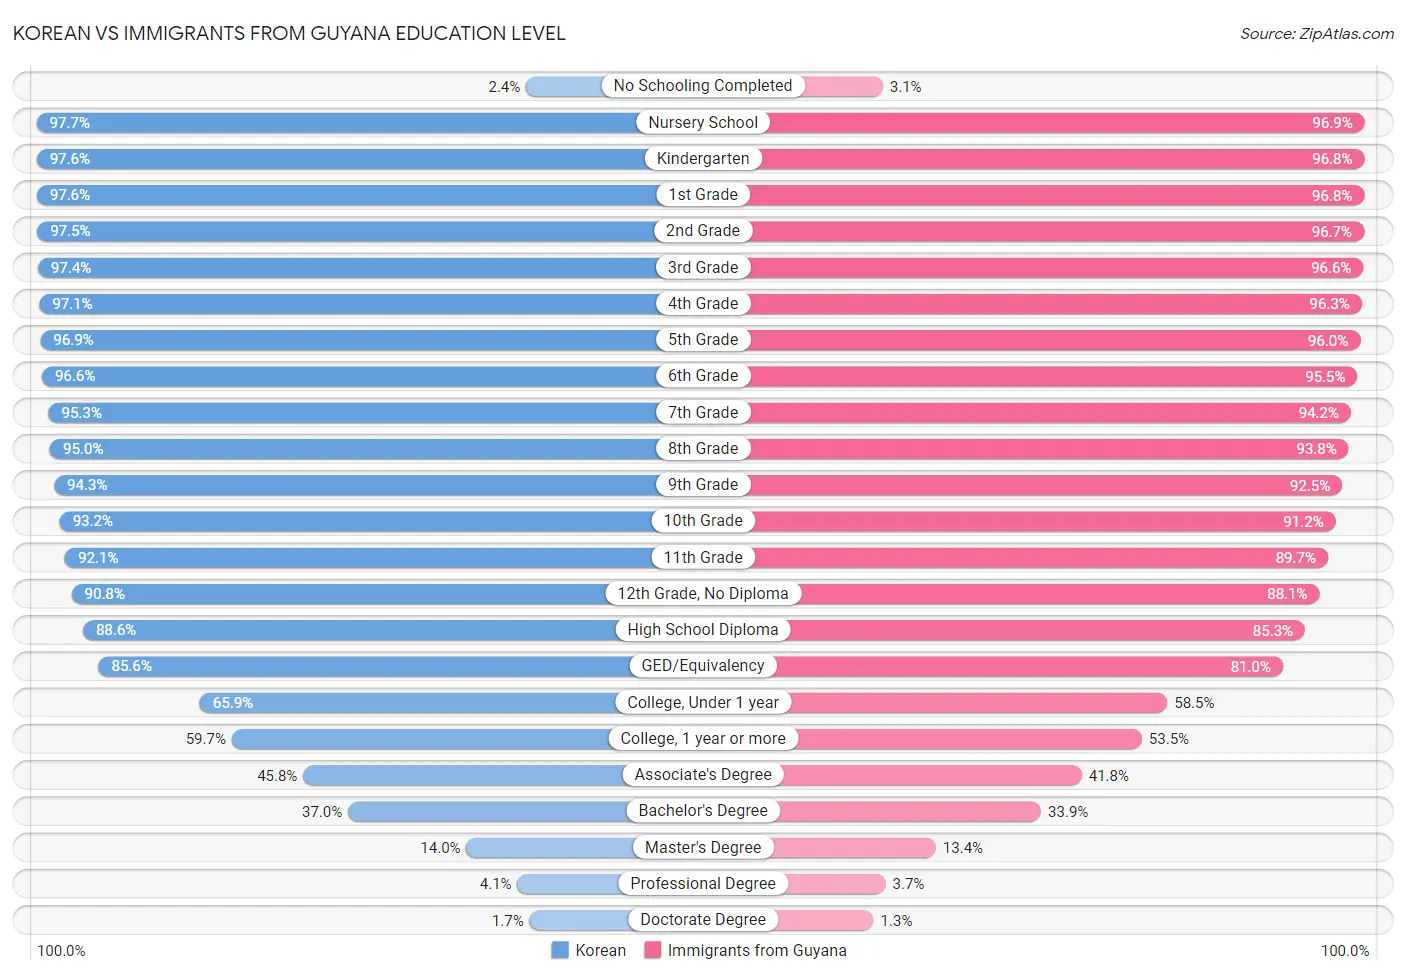 Korean vs Immigrants from Guyana Education Level